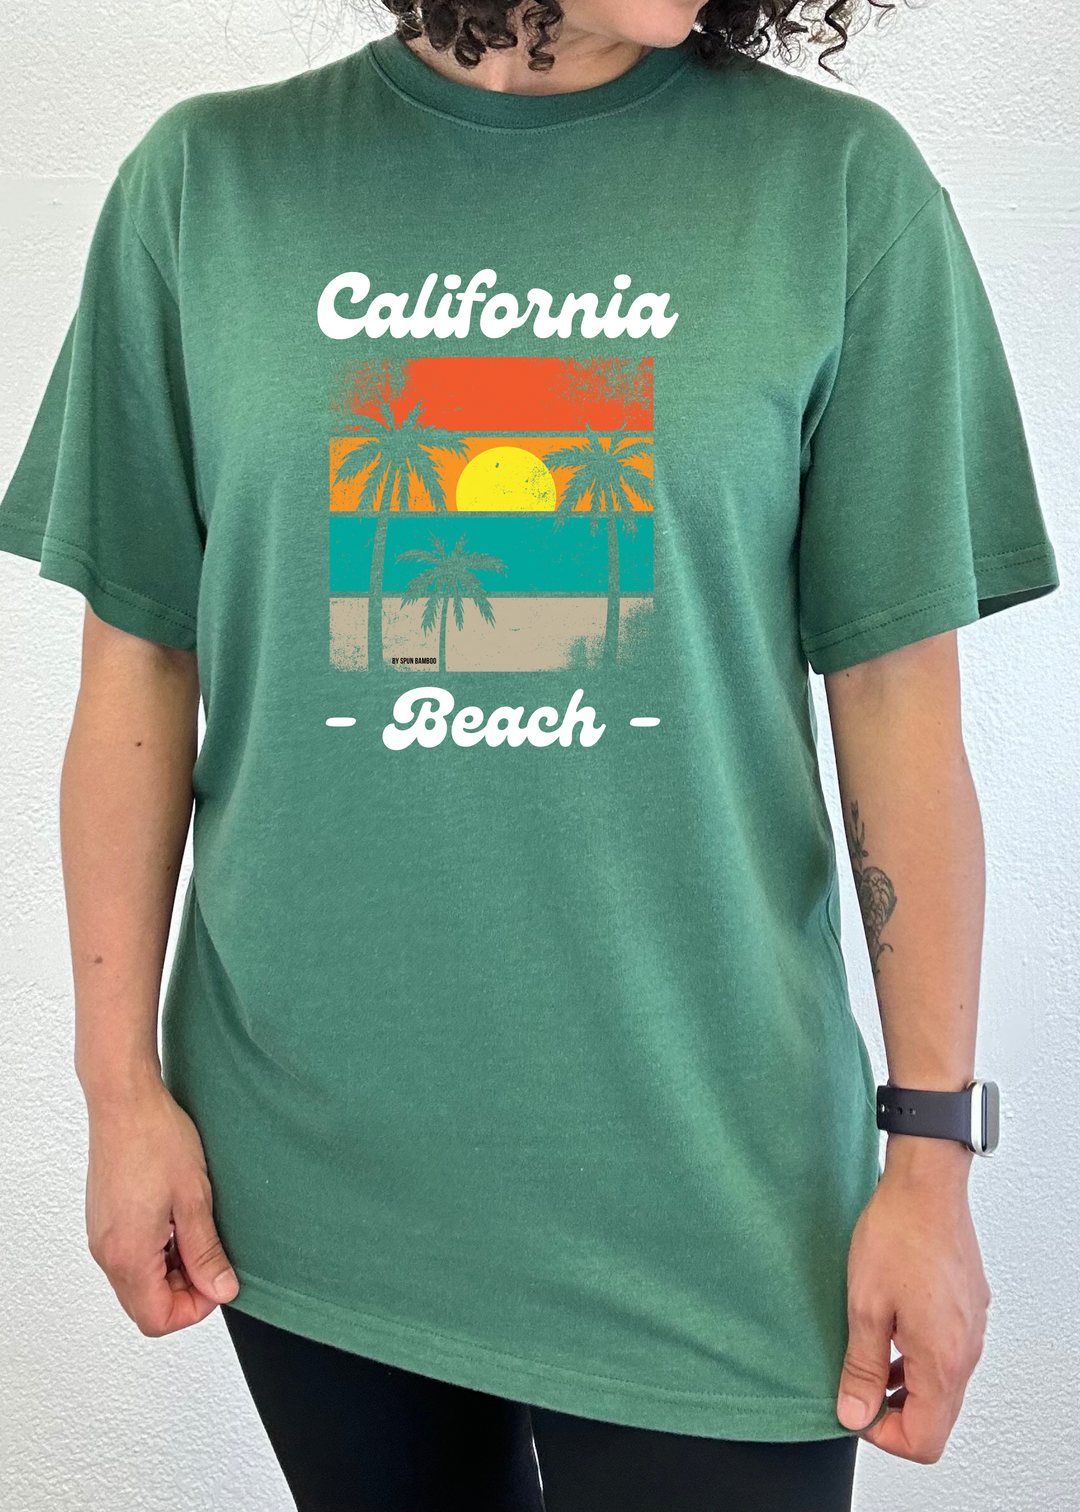 California Beach Unisex Graphic Bamboo T-Shirt teal